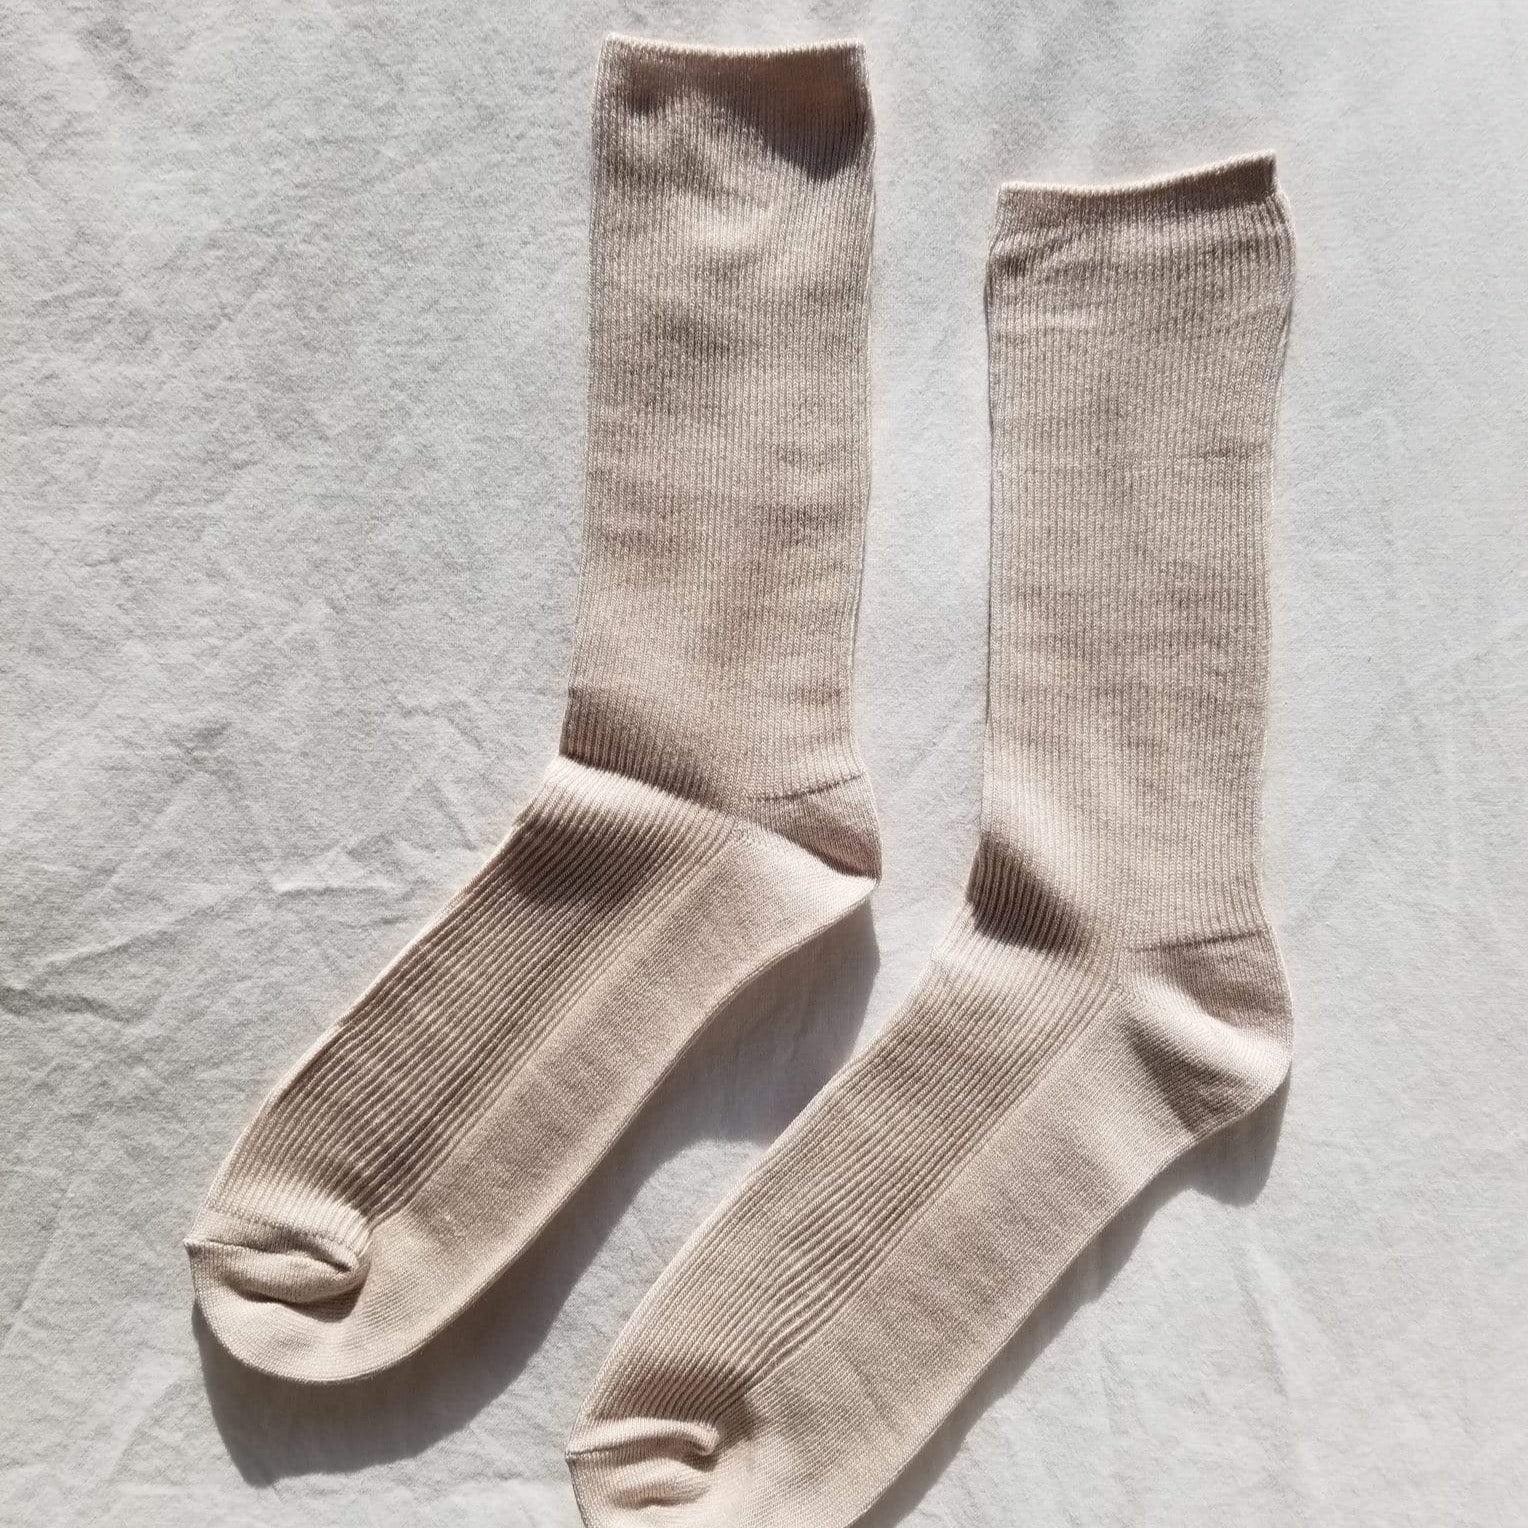 trouser socks. Eggnog by Le Bon Shoppe